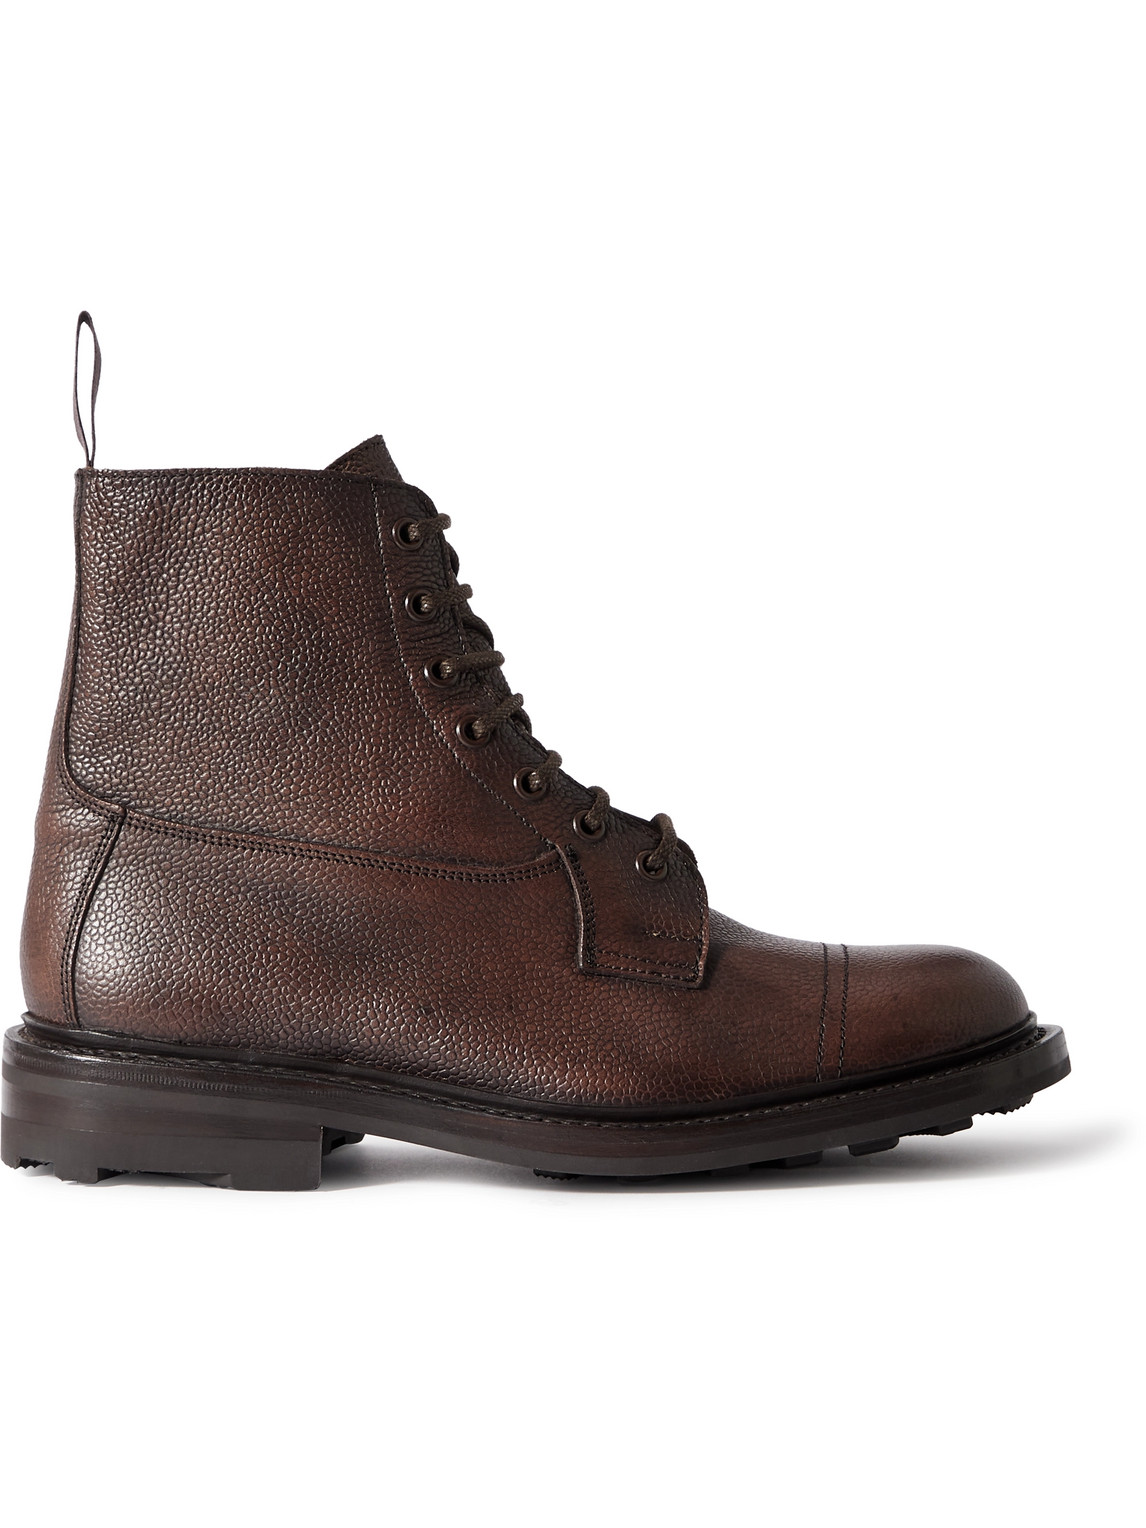 Grassmere Scotchgrain Leather Boots